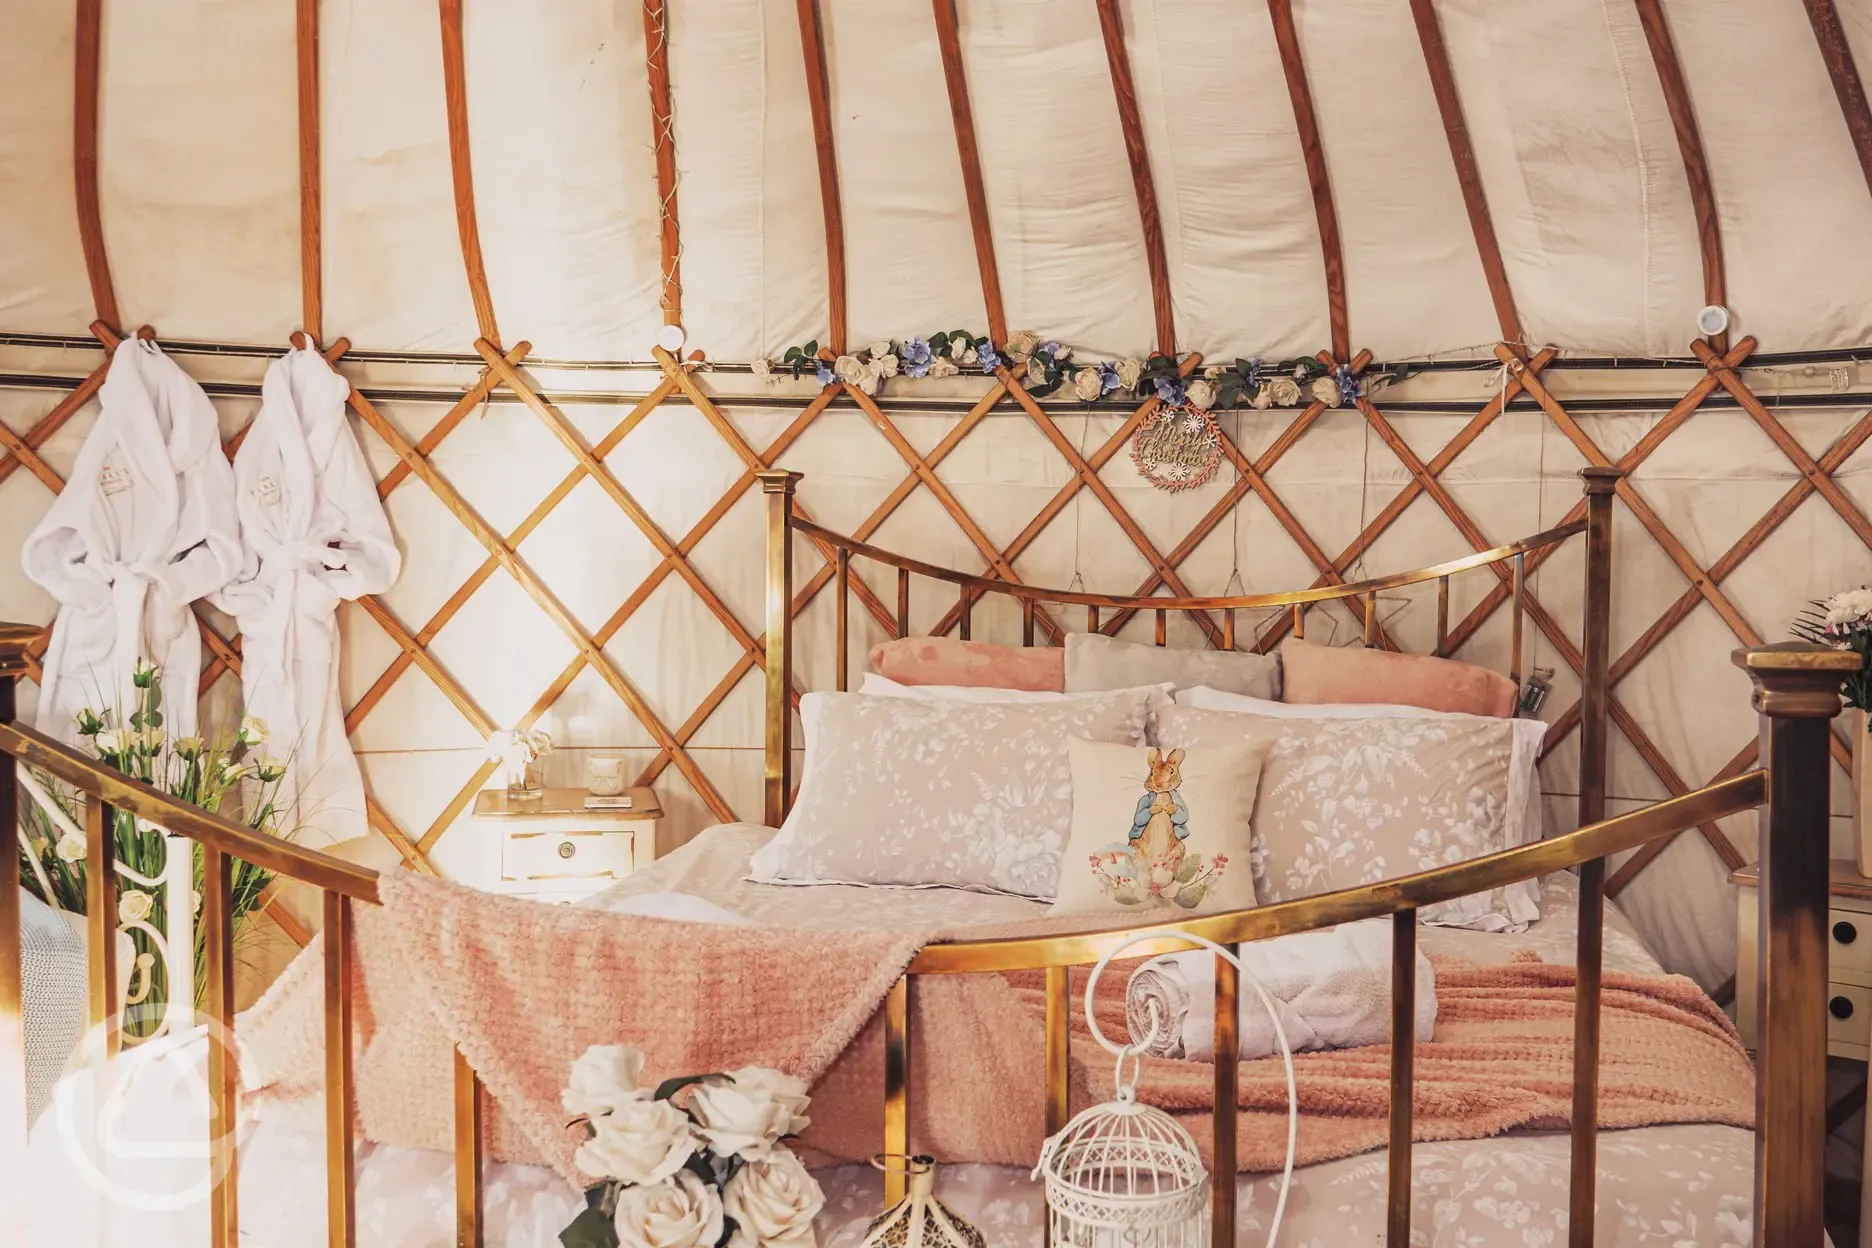 Potter's Lodge yurt